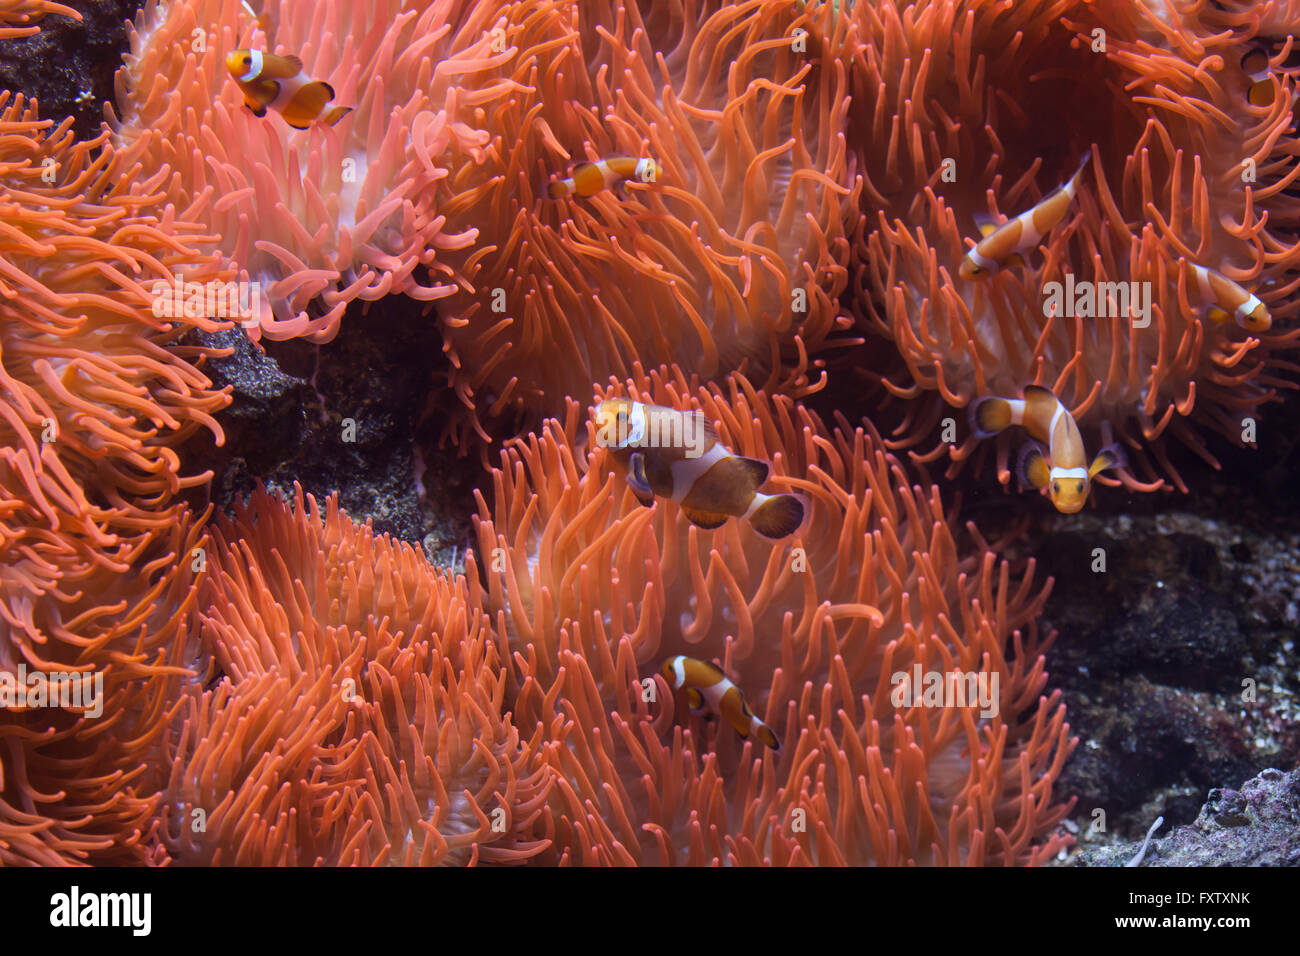 Ocellaris clownfish (Amphiprion ocellaris) swimming in the magnificent sea anemone (Heteractis magnifica) in the Genoa Aquarium in Genoa, Liguria, Italy. Stock Photo